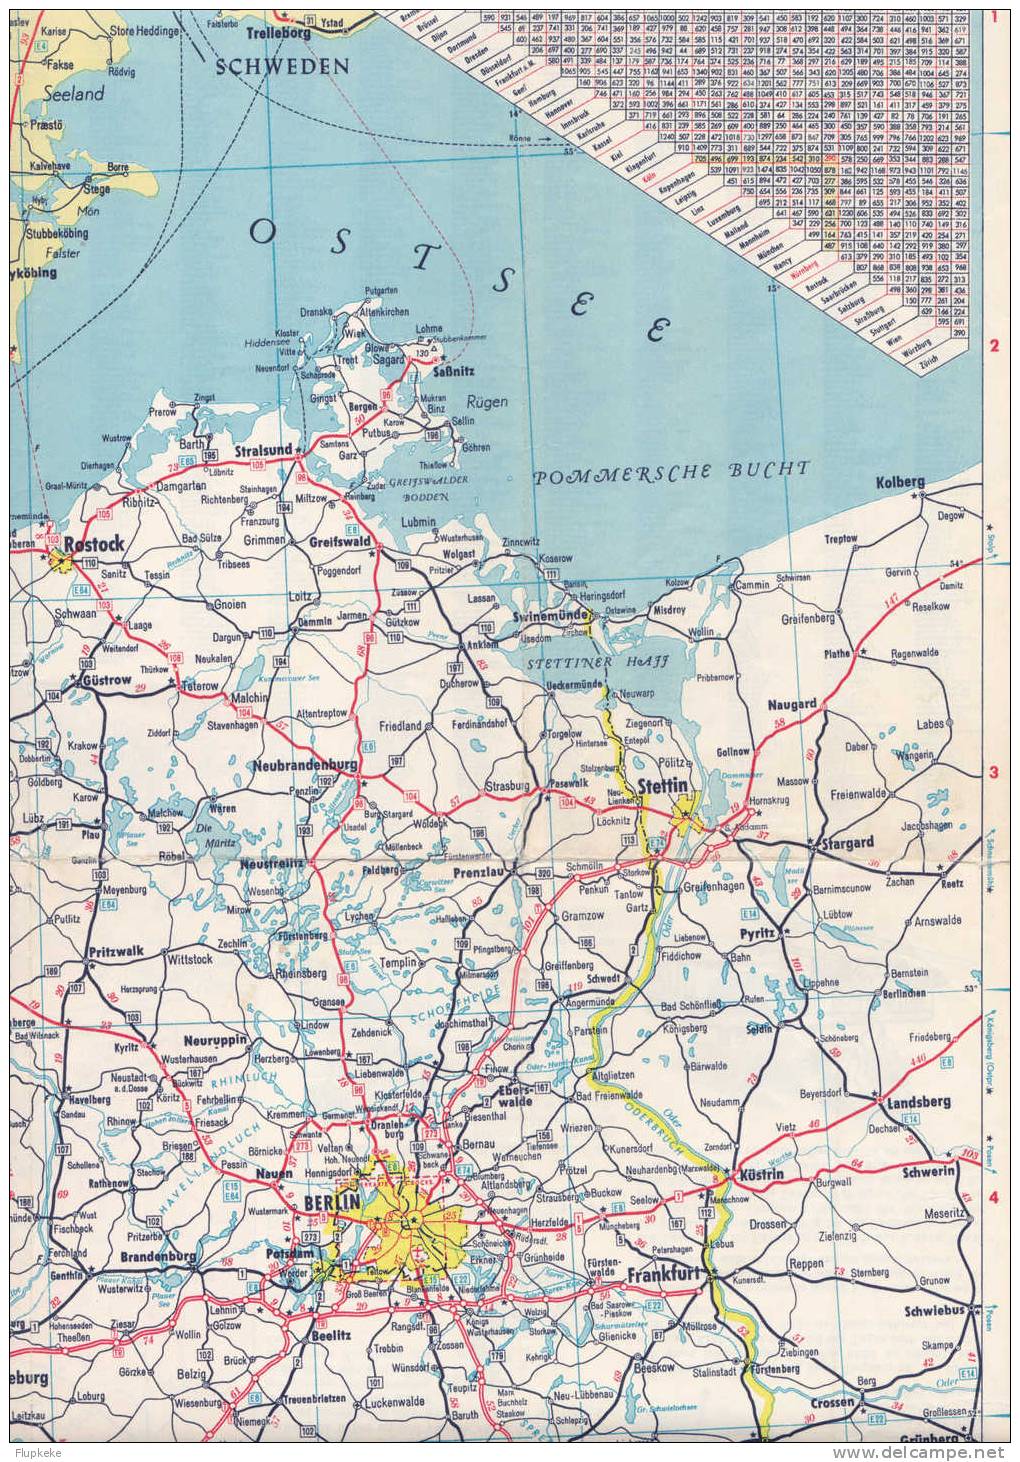 Carte Esso Deutschland 1959 - Karten/Atlanten